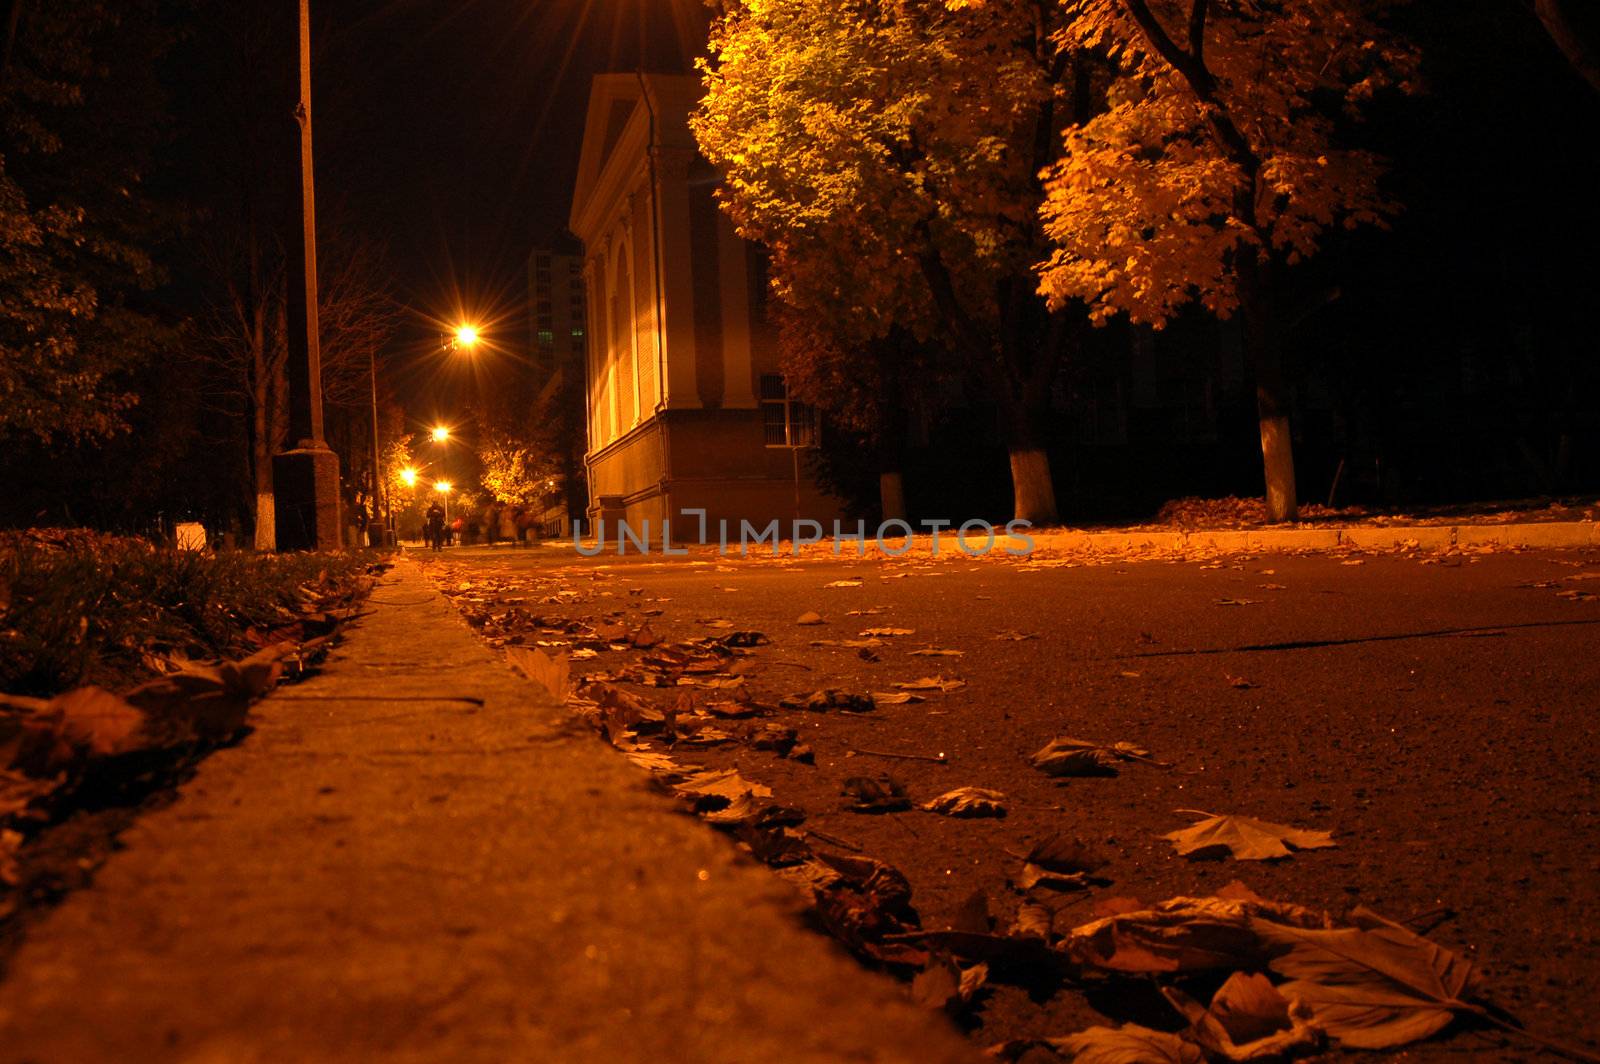 One warm autumn night at light of city lanterns